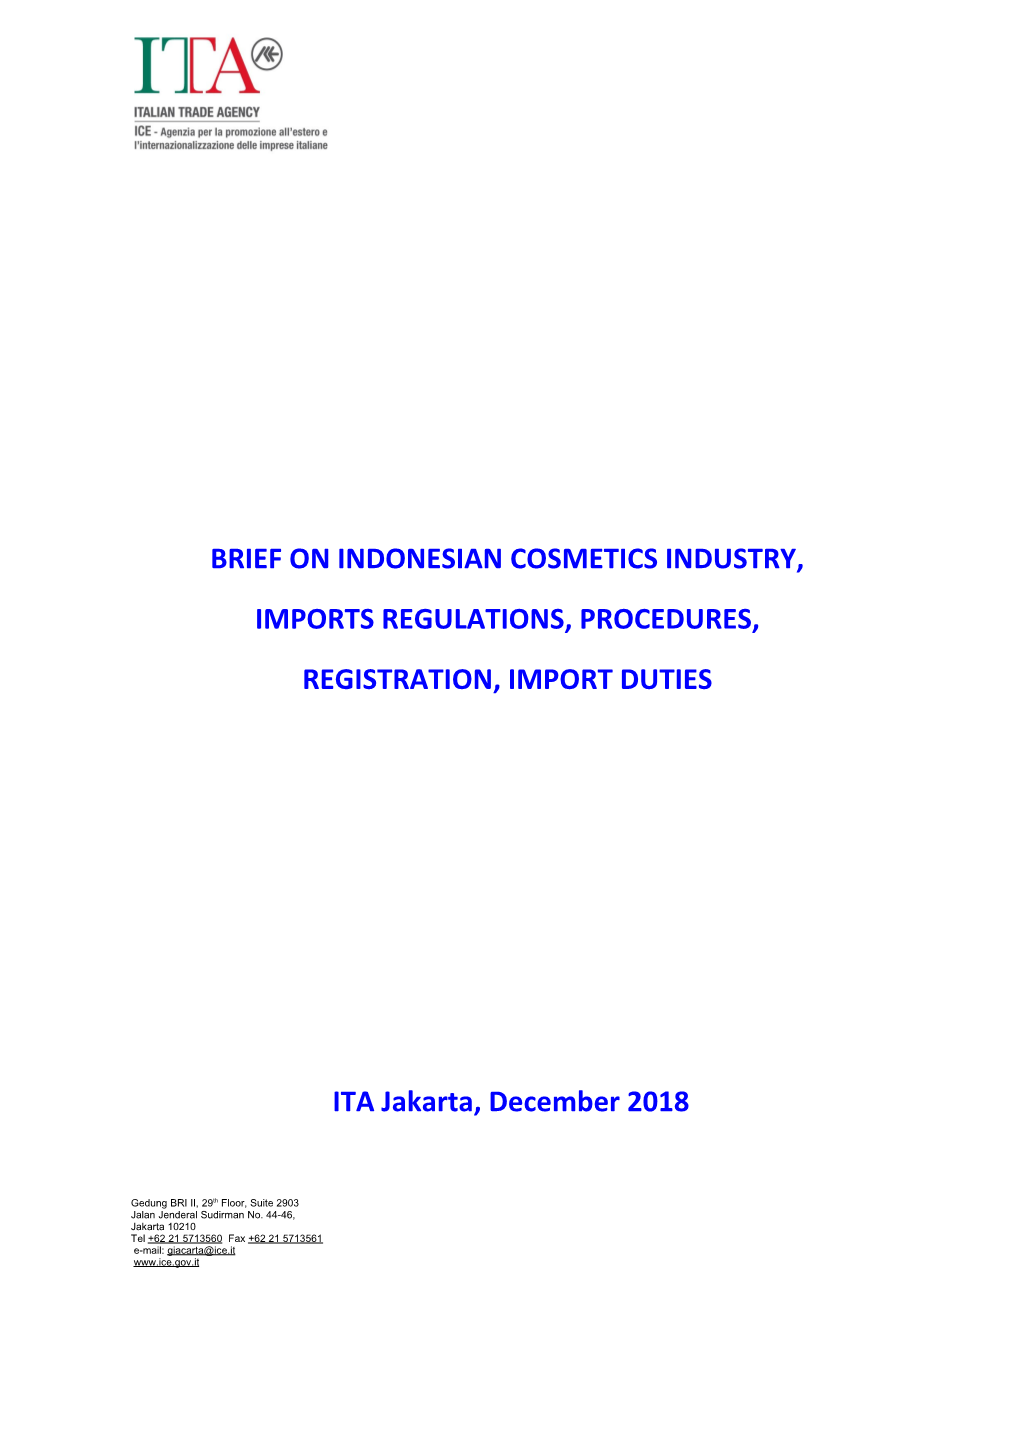 Brief on Indonesian Cosmetics Industry, Imports Regulations, Procedures, Registration, Import Duties